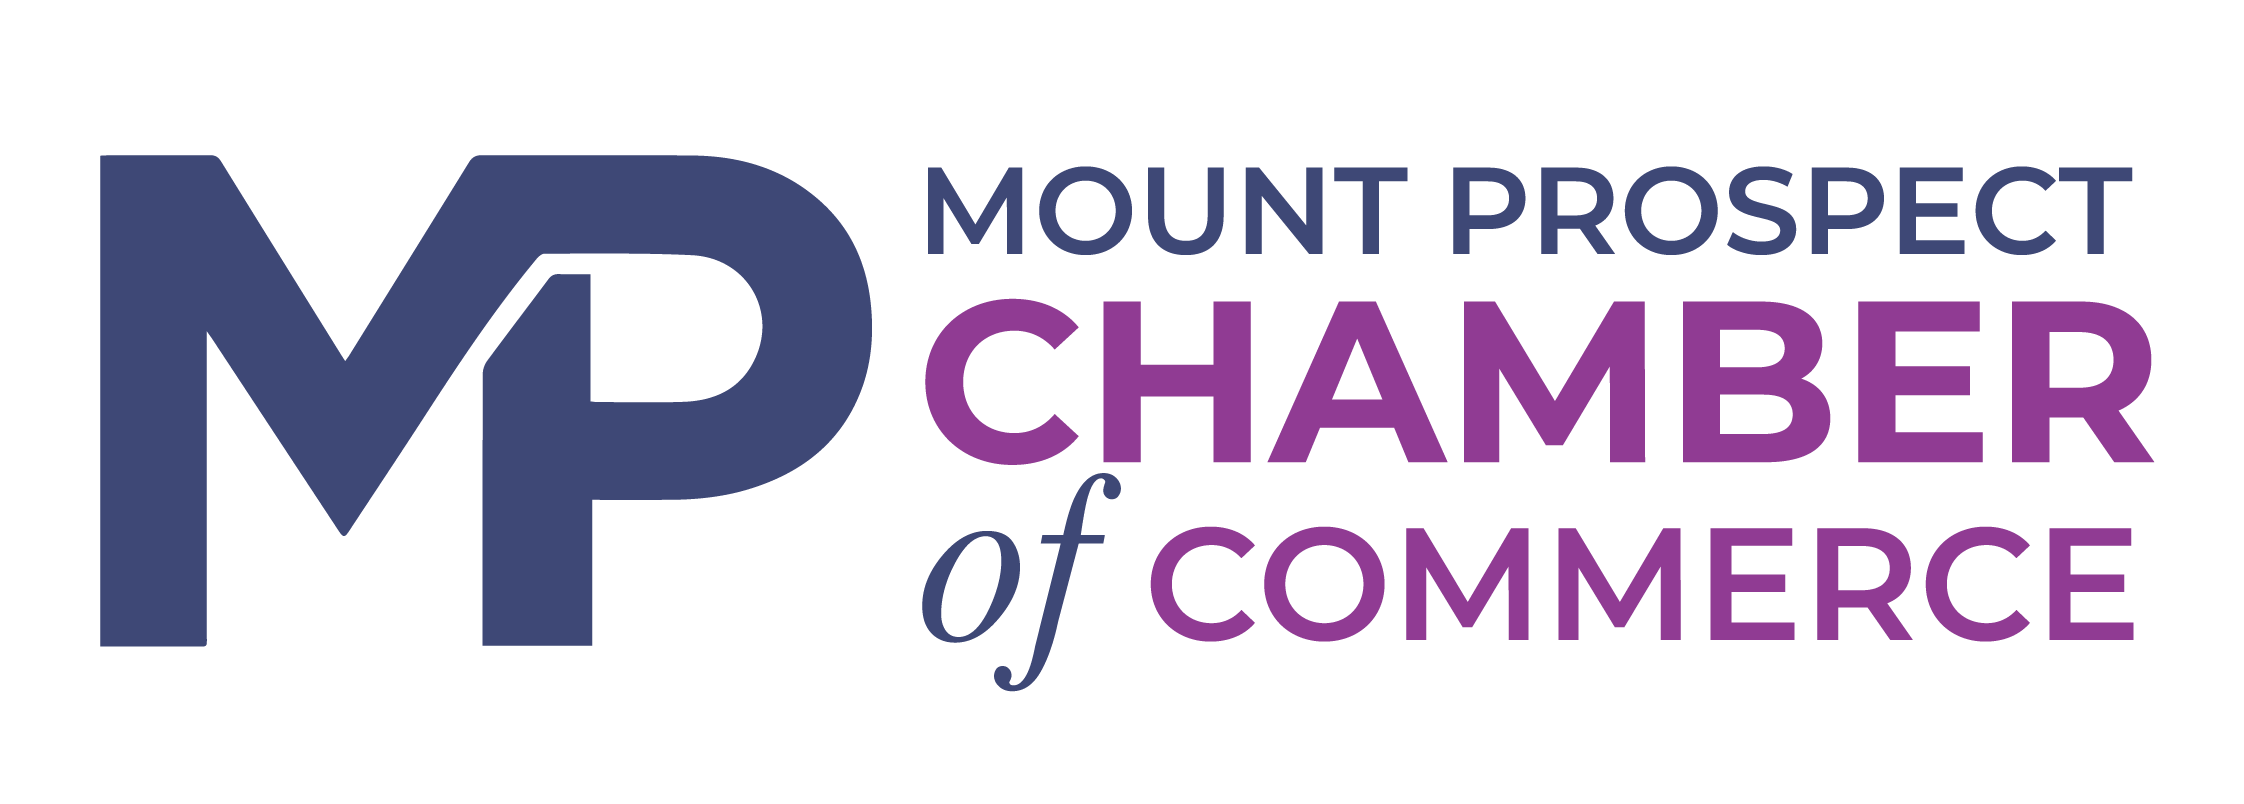 MP Chamber of Commerce logo